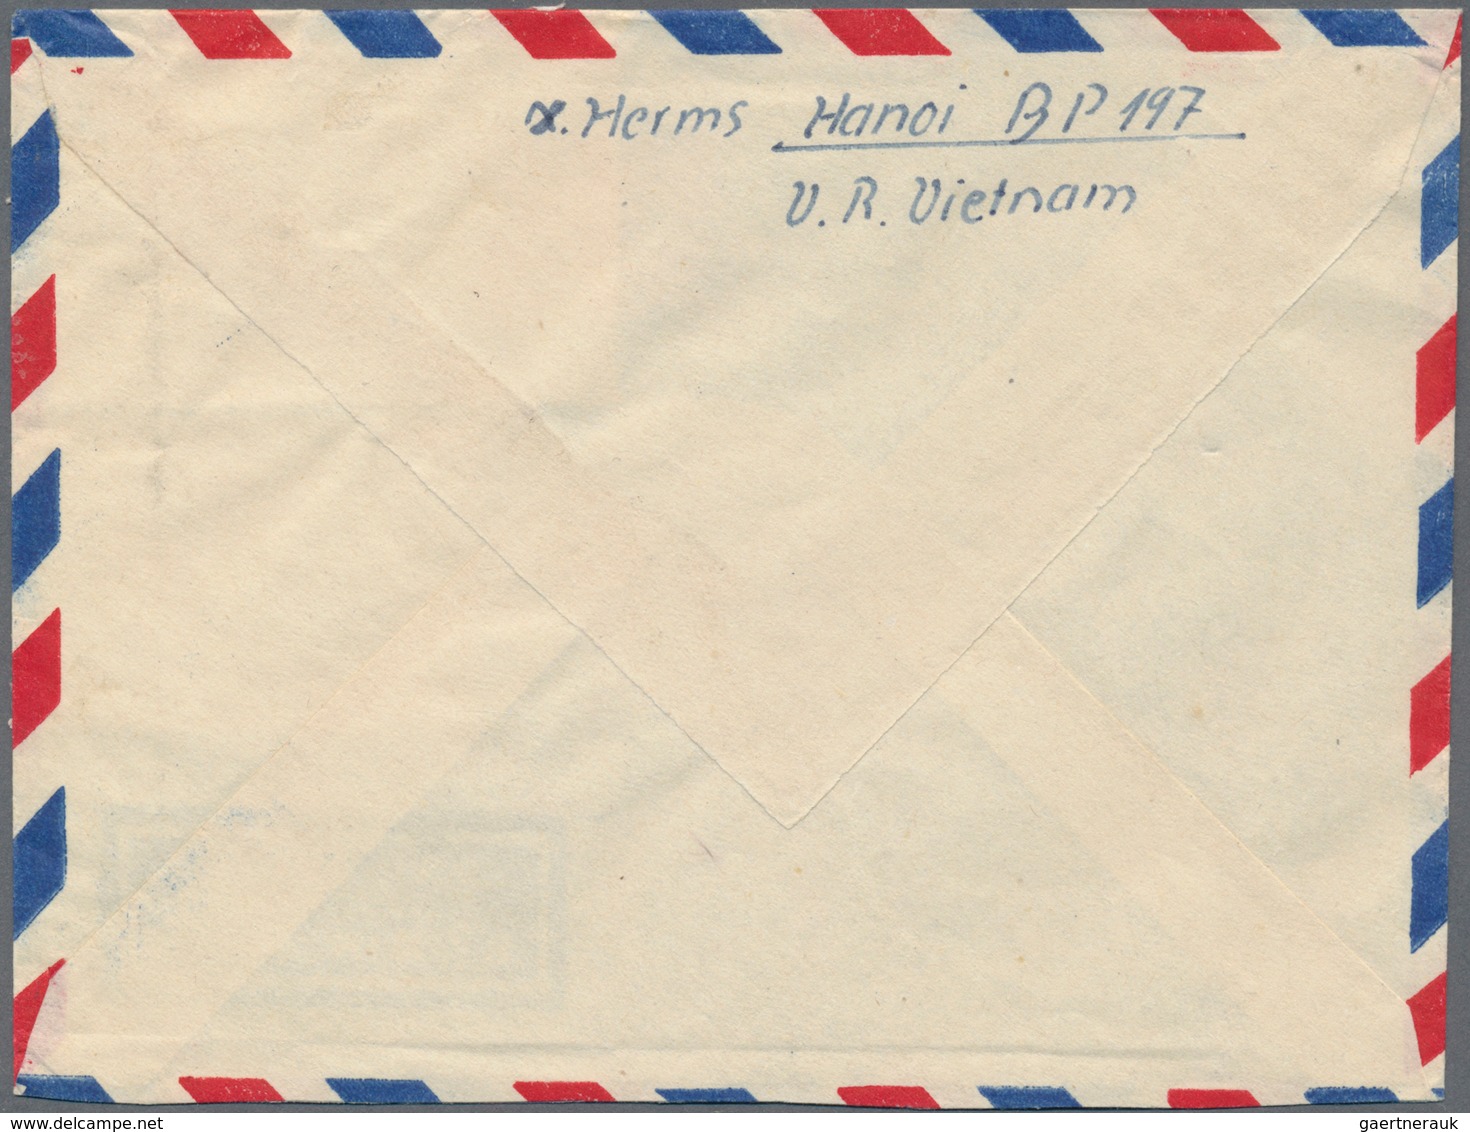 Vietnam-Nord (1945-1975): 1955/57, Airmail Cover Addressed To Berlin, East Germany, Bearing Liberati - Vietnam